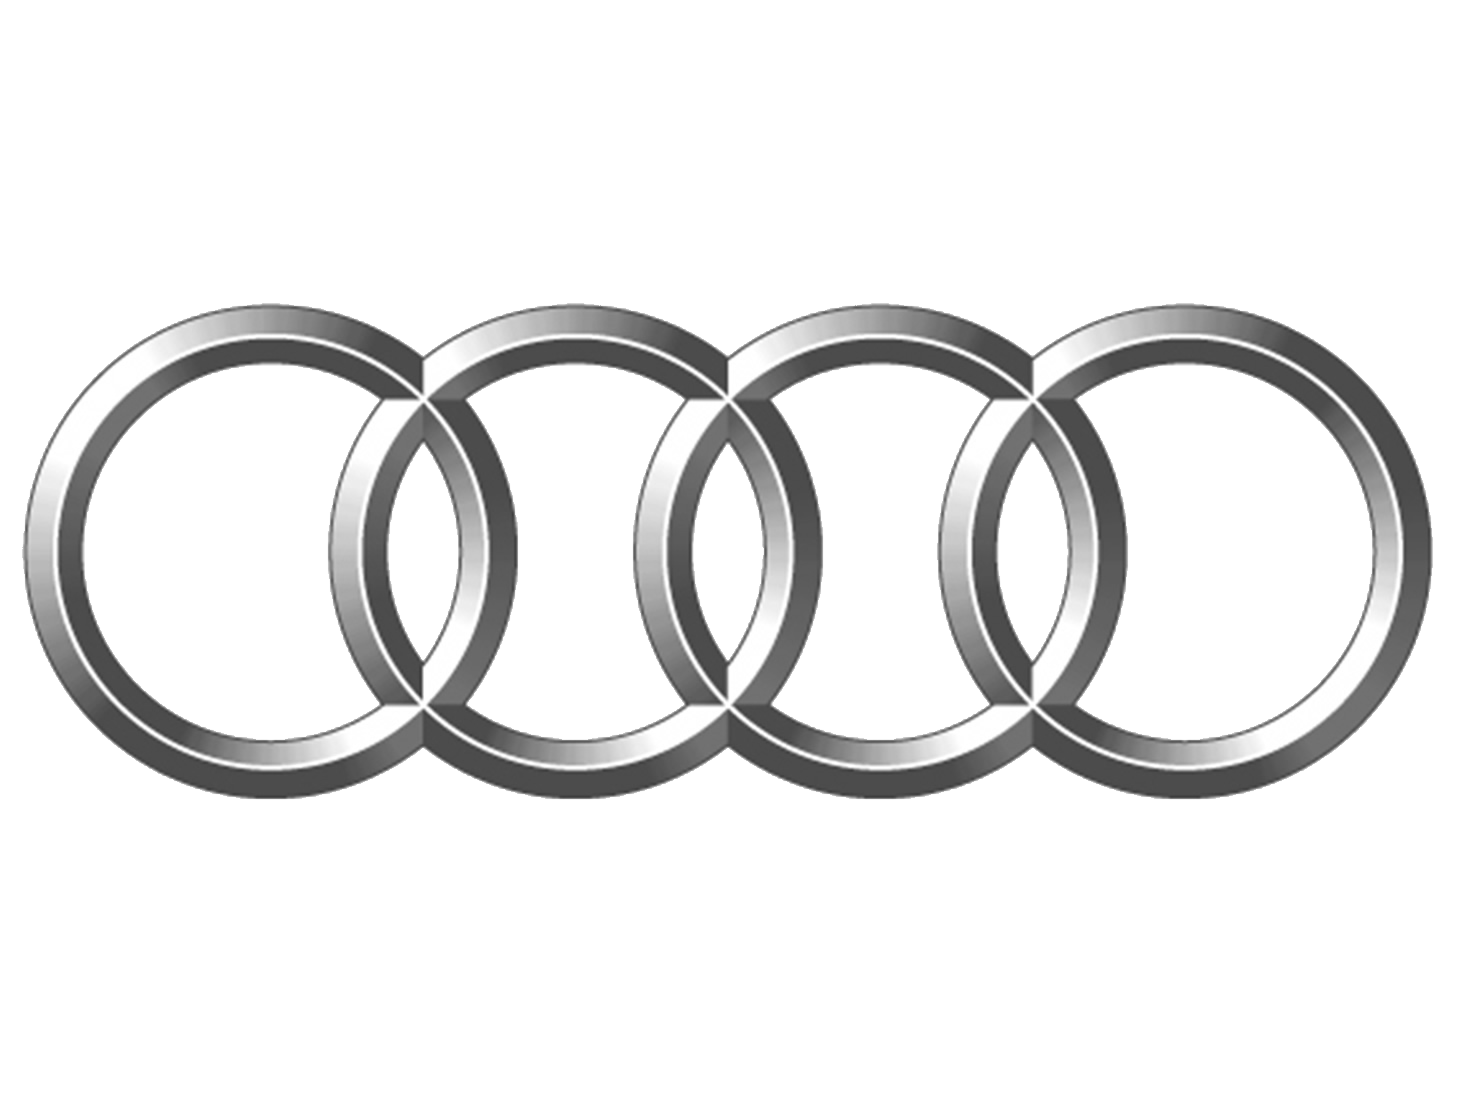 Audi Car Logo Png Brand Image - Audi, Transparent background PNG HD thumbnail